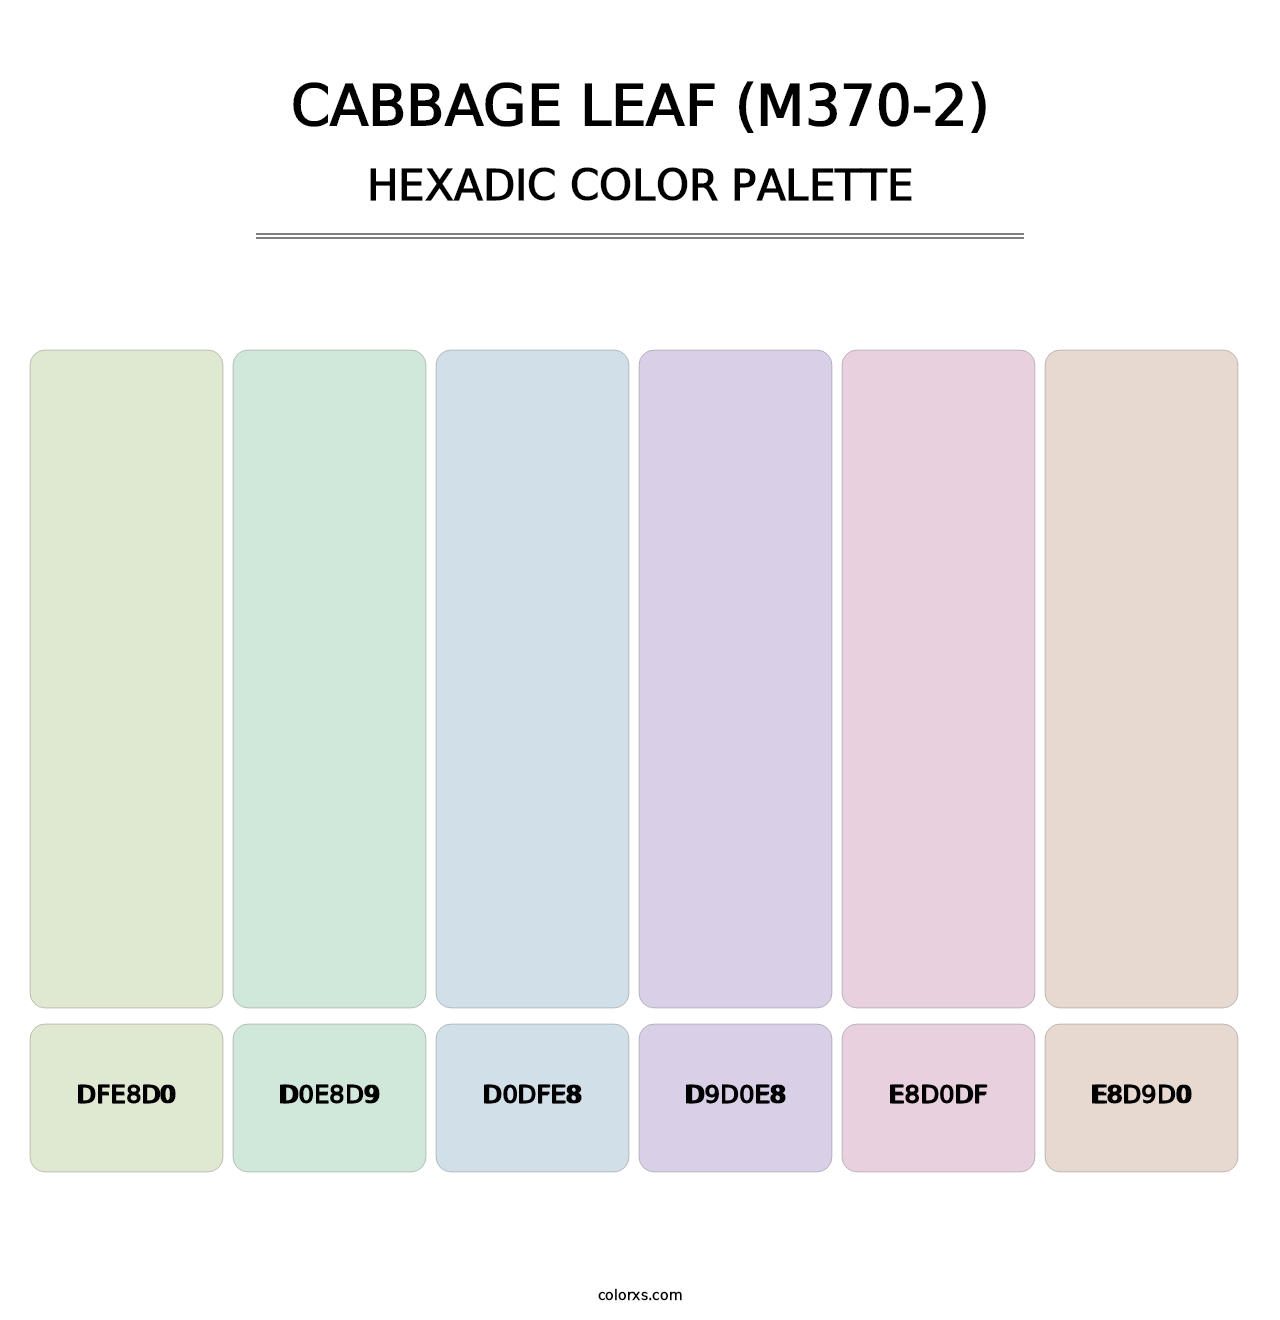 Cabbage Leaf (M370-2) - Hexadic Color Palette